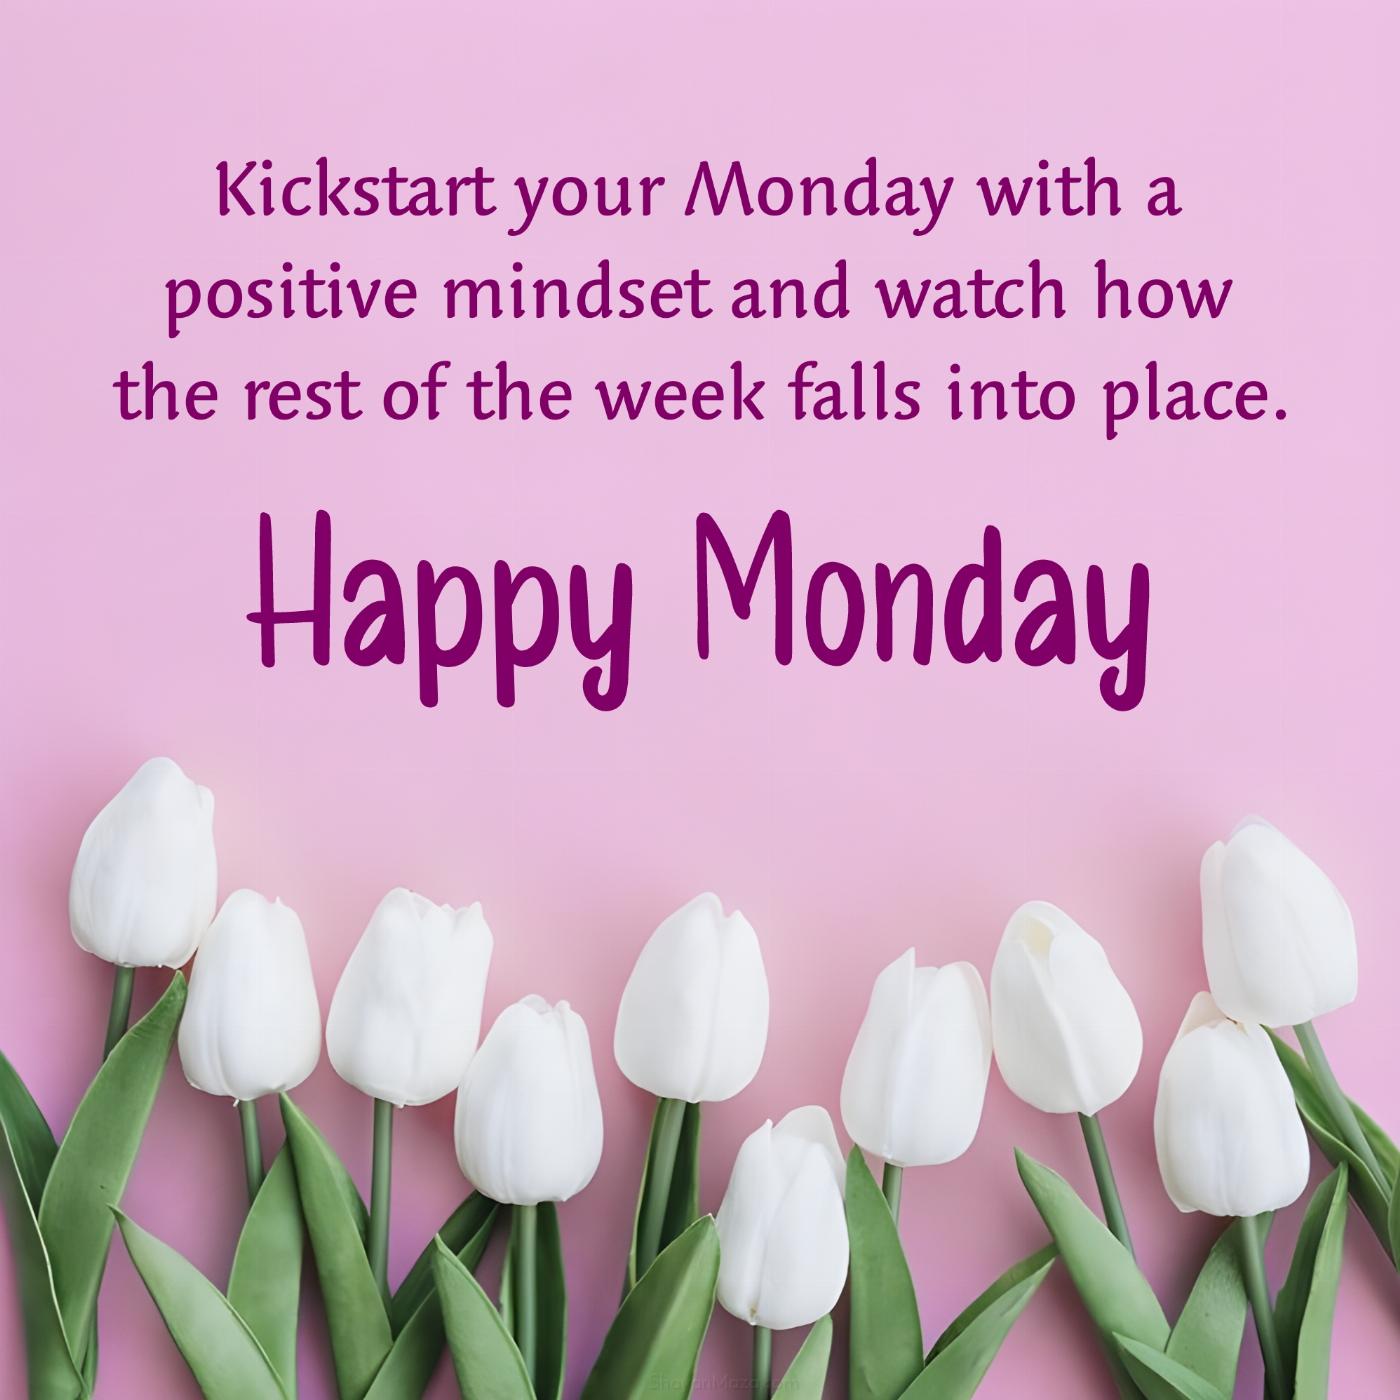 Kickstart your Monday with a positive mindset